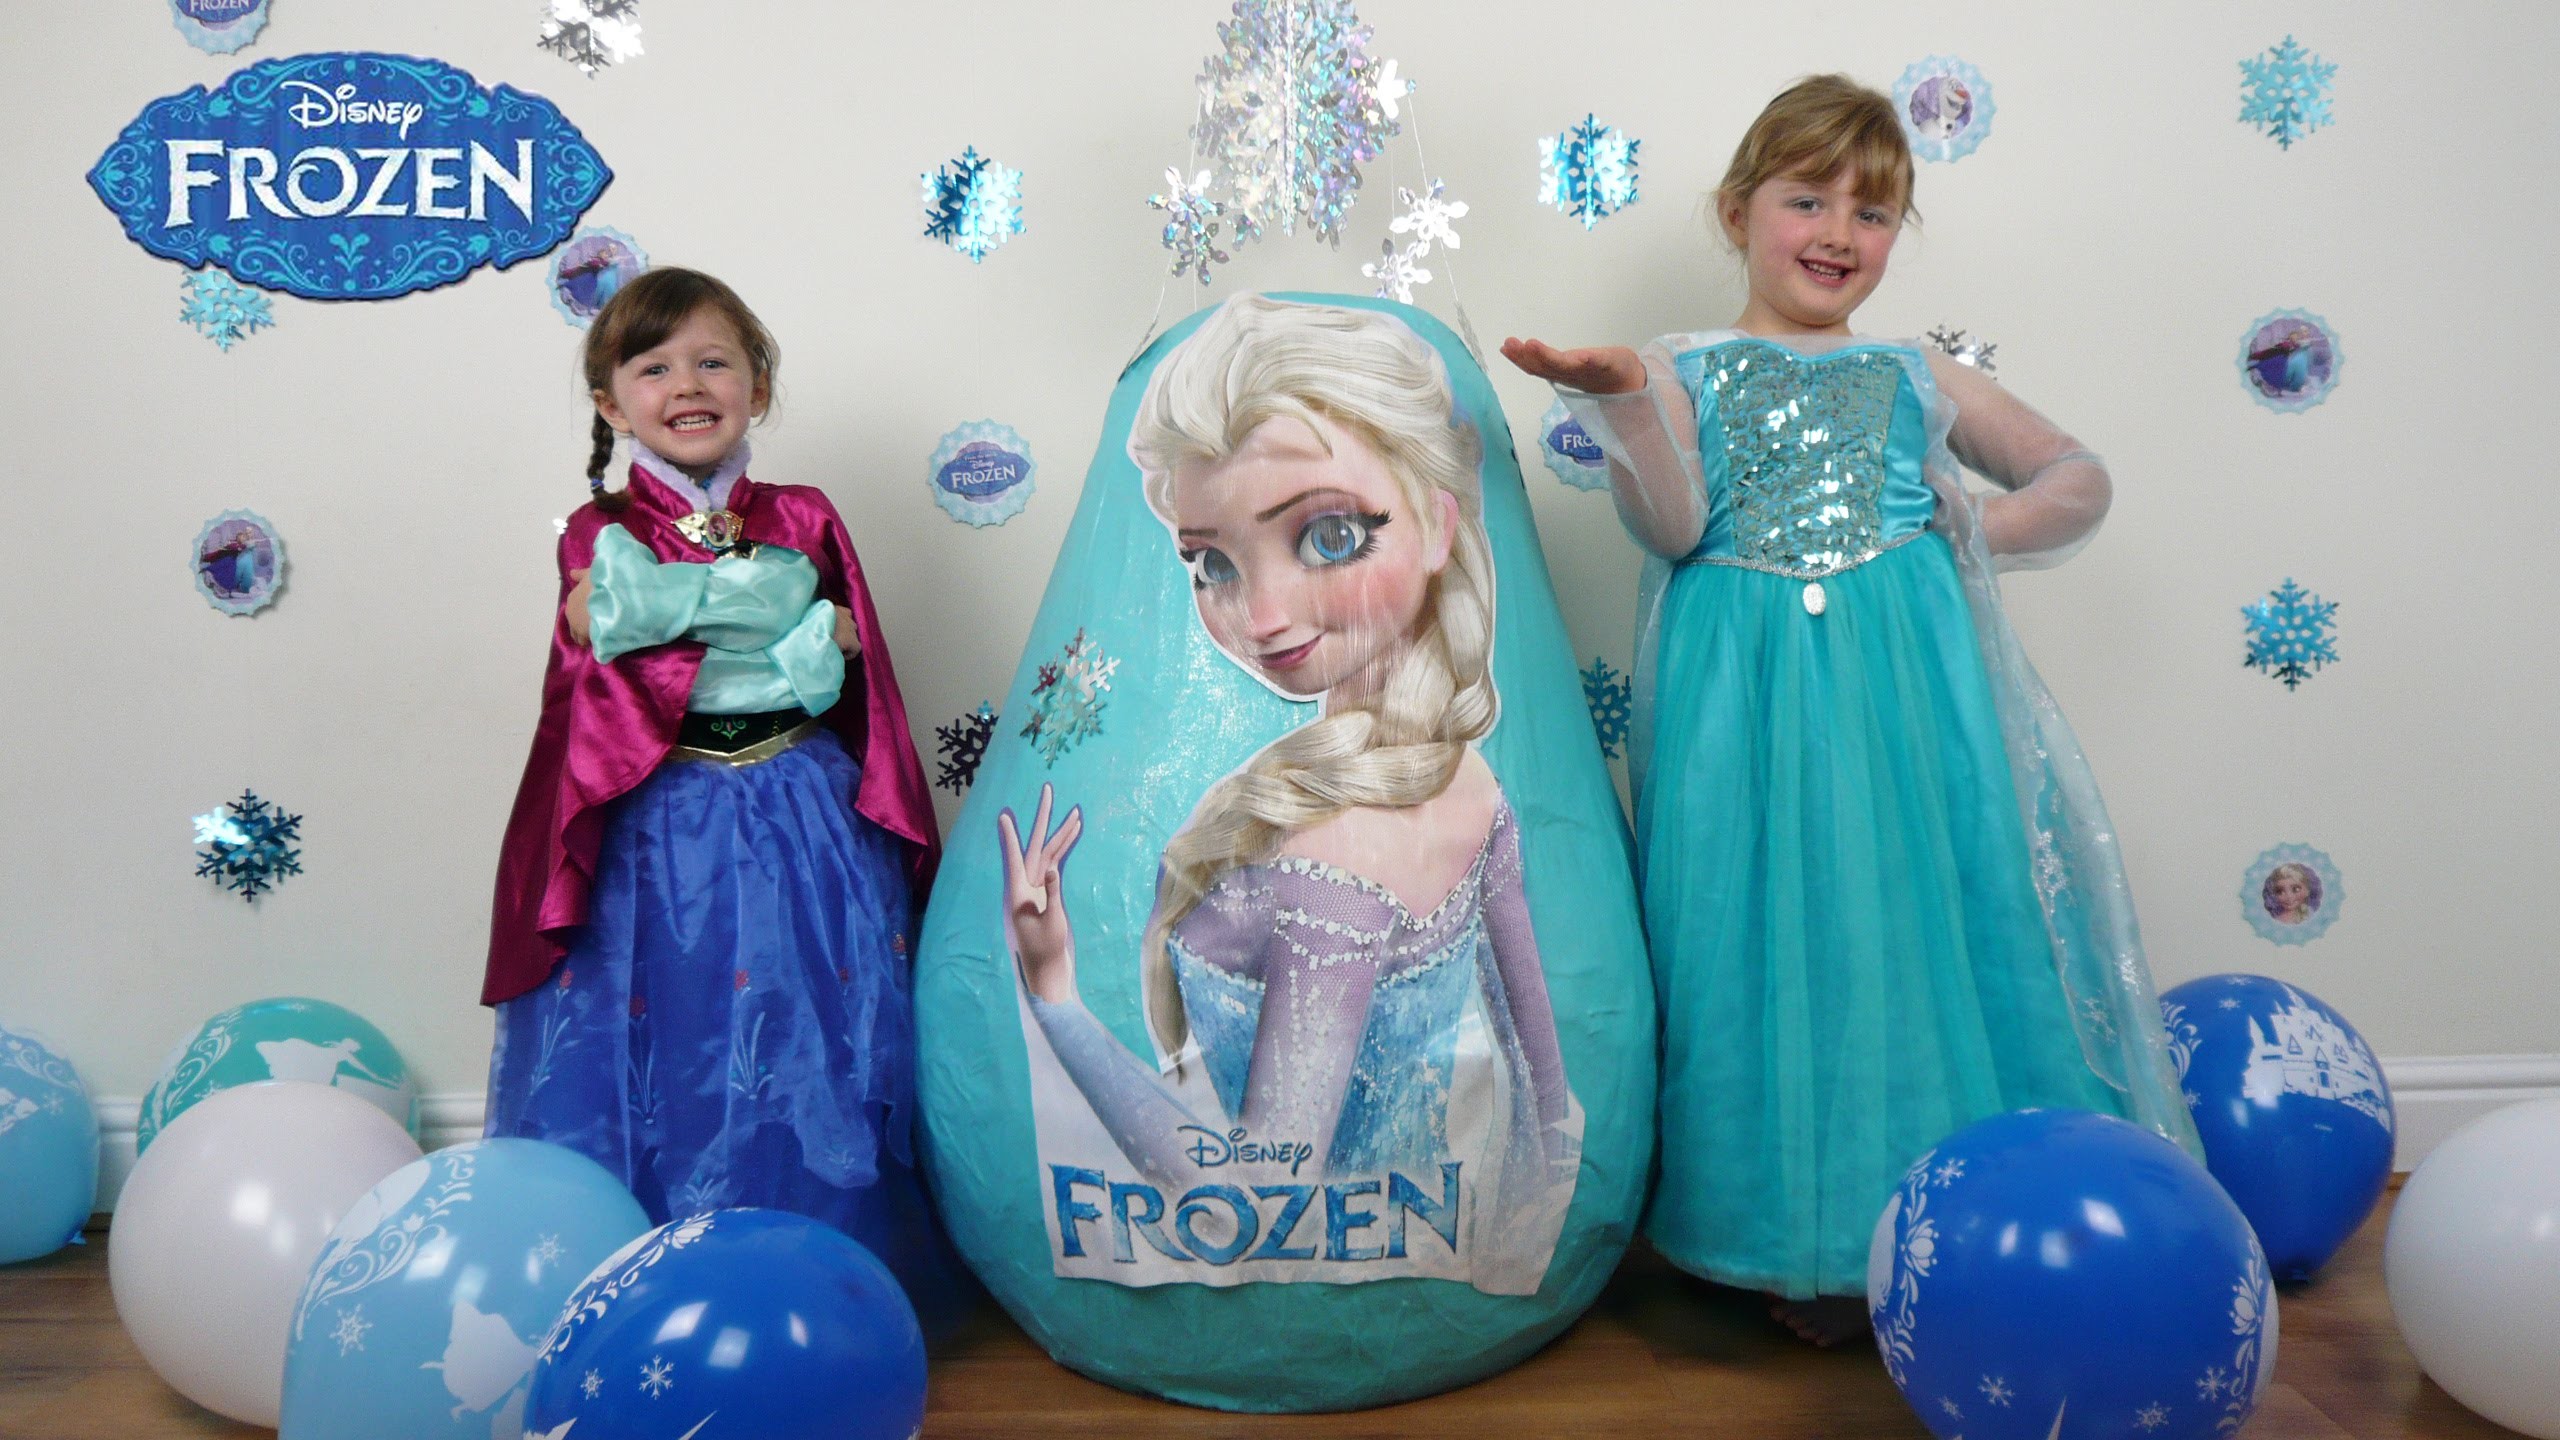 DISNEY FROZEN Videos SUPER GIANT SURPRISE EGG Worlds Biggest Frozen Egg ELSA ANNA Dolls LET IT GO